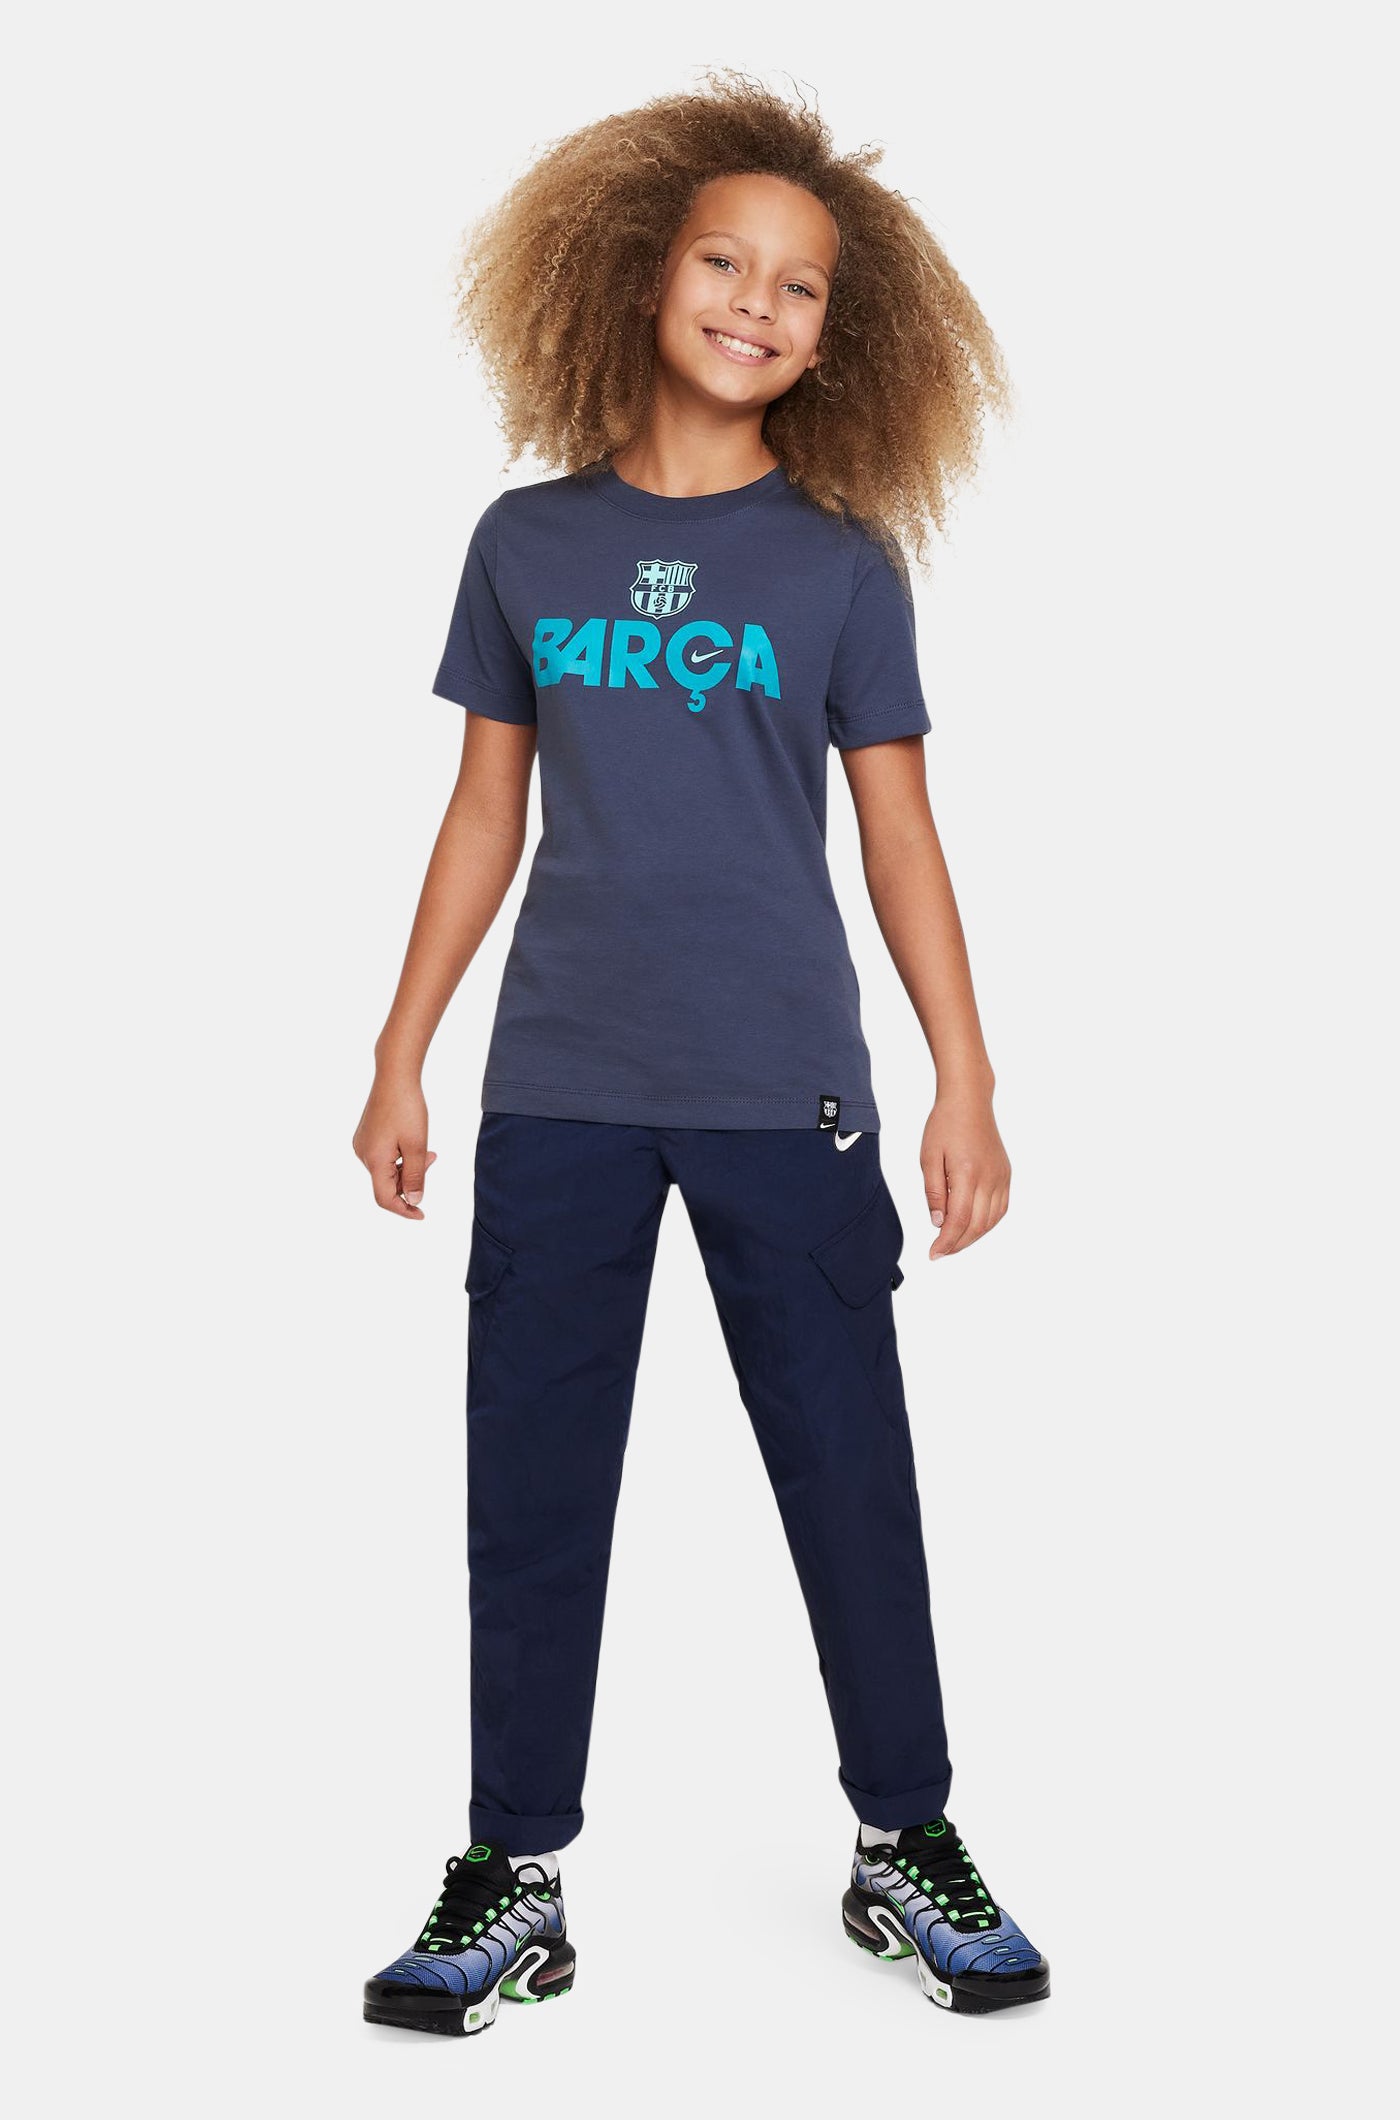 T-Shirt blau Barça Nike - Junior